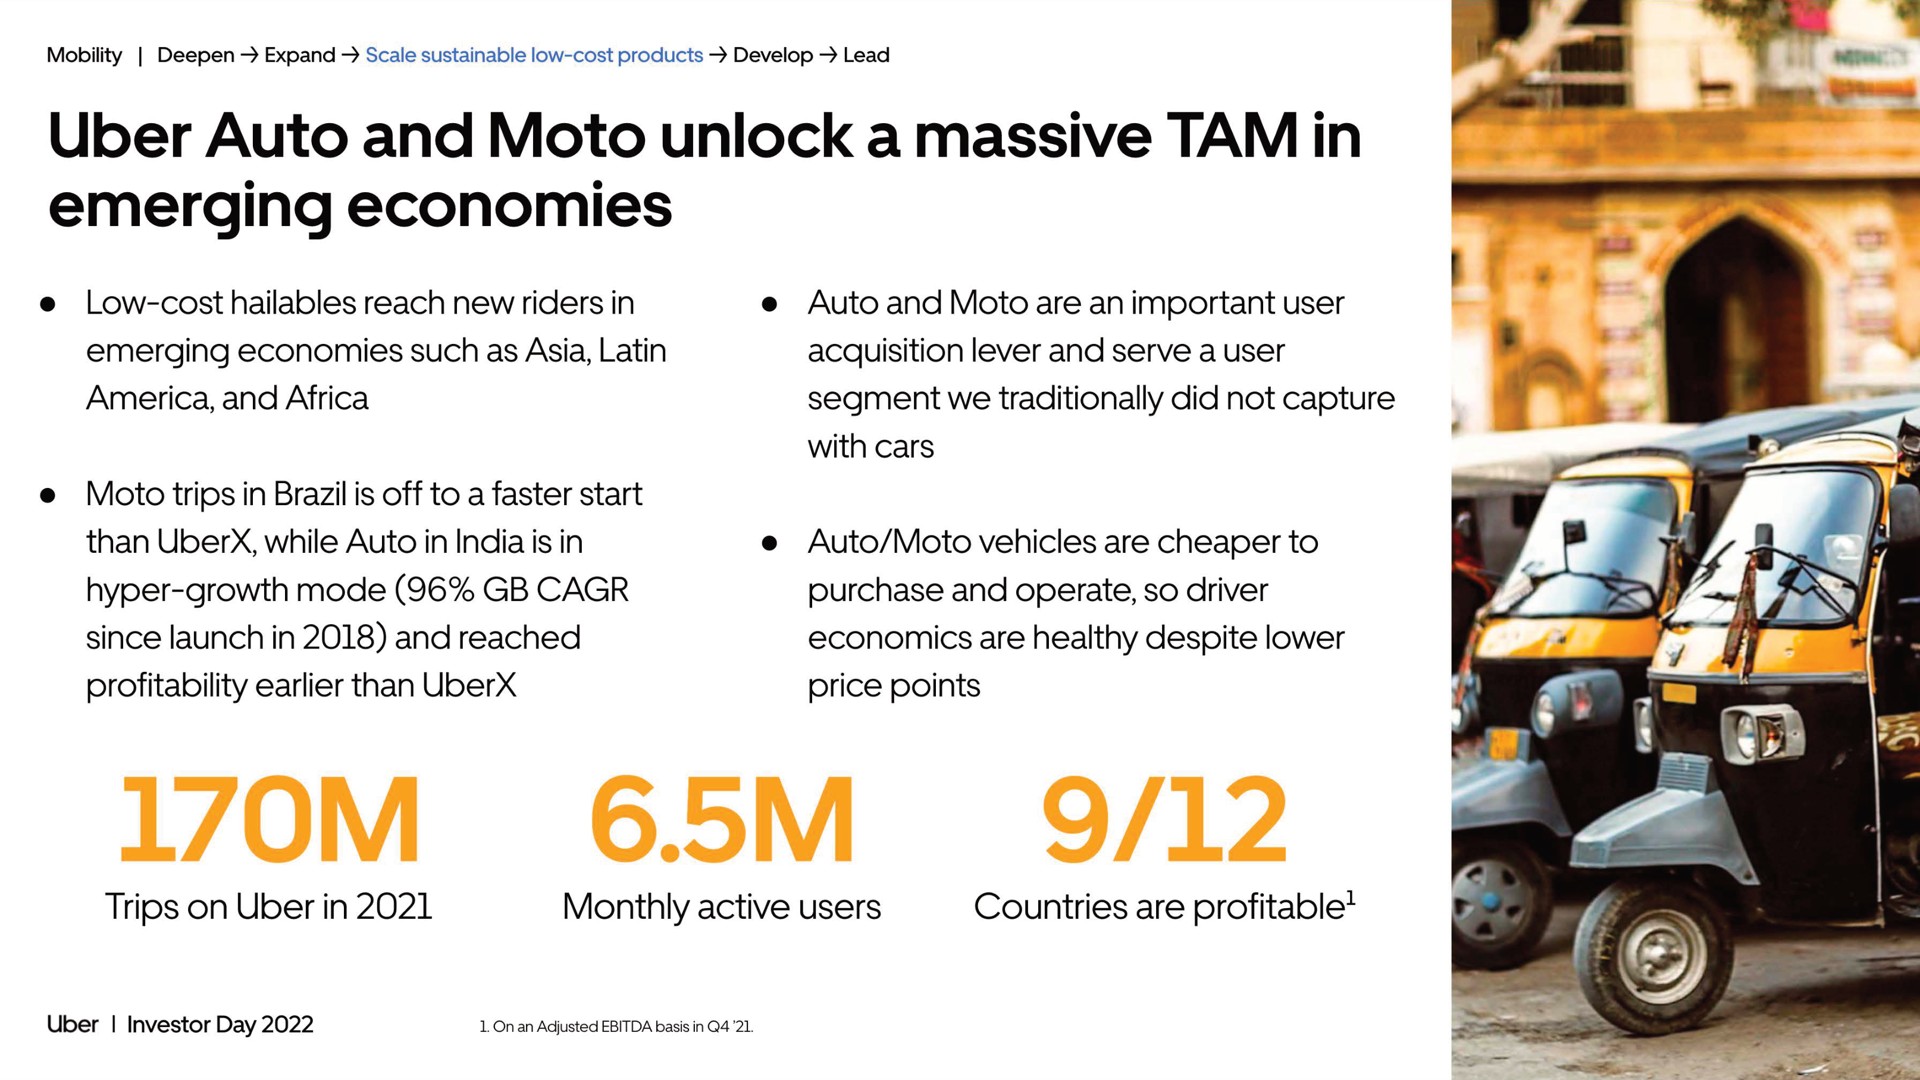 auto and unlock a massive tam in emerging economies | Uber